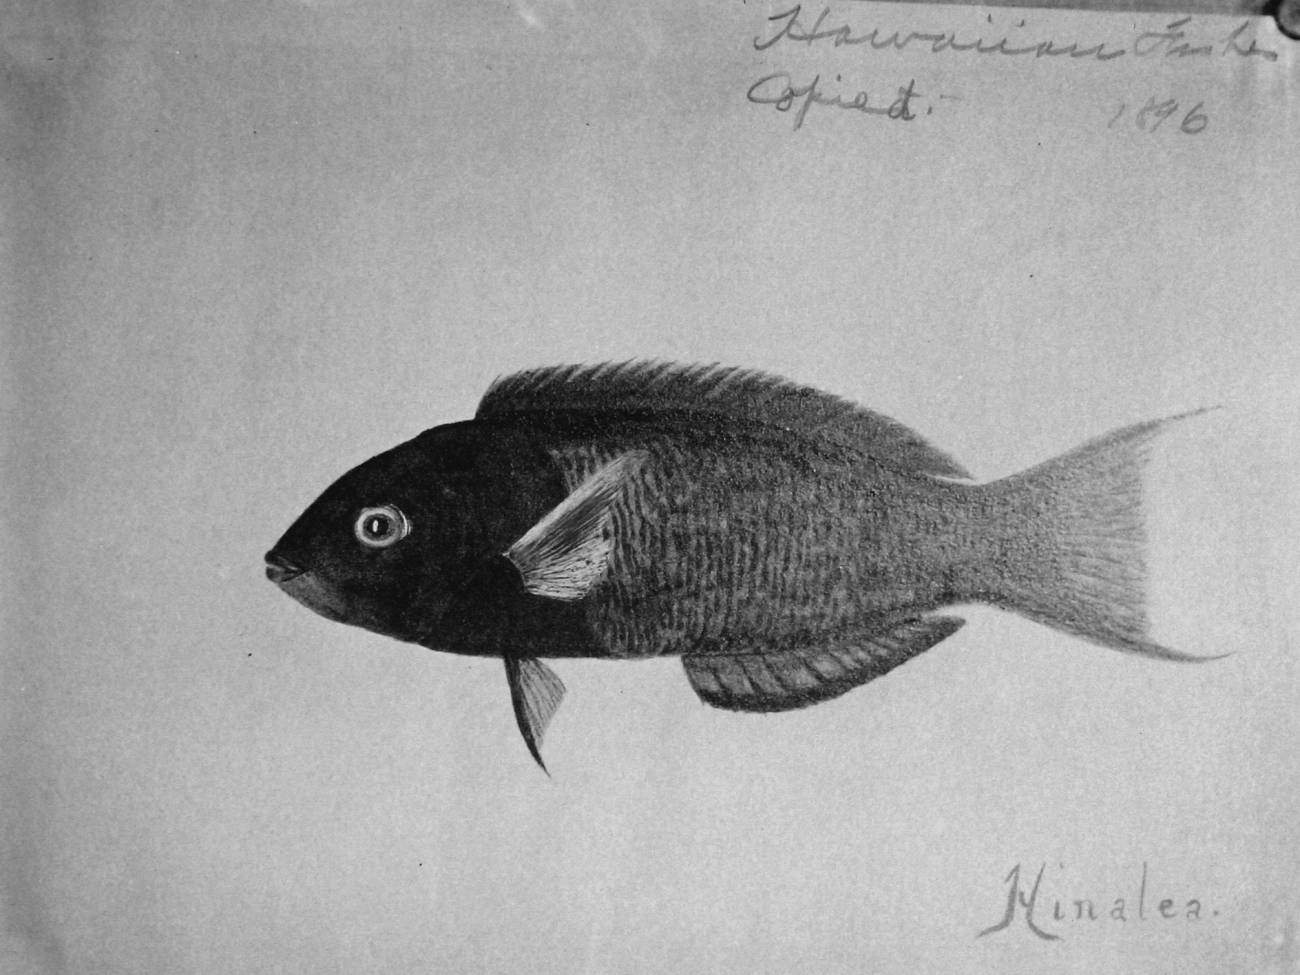 Hawaiian Fishes, 1896, Hinalea